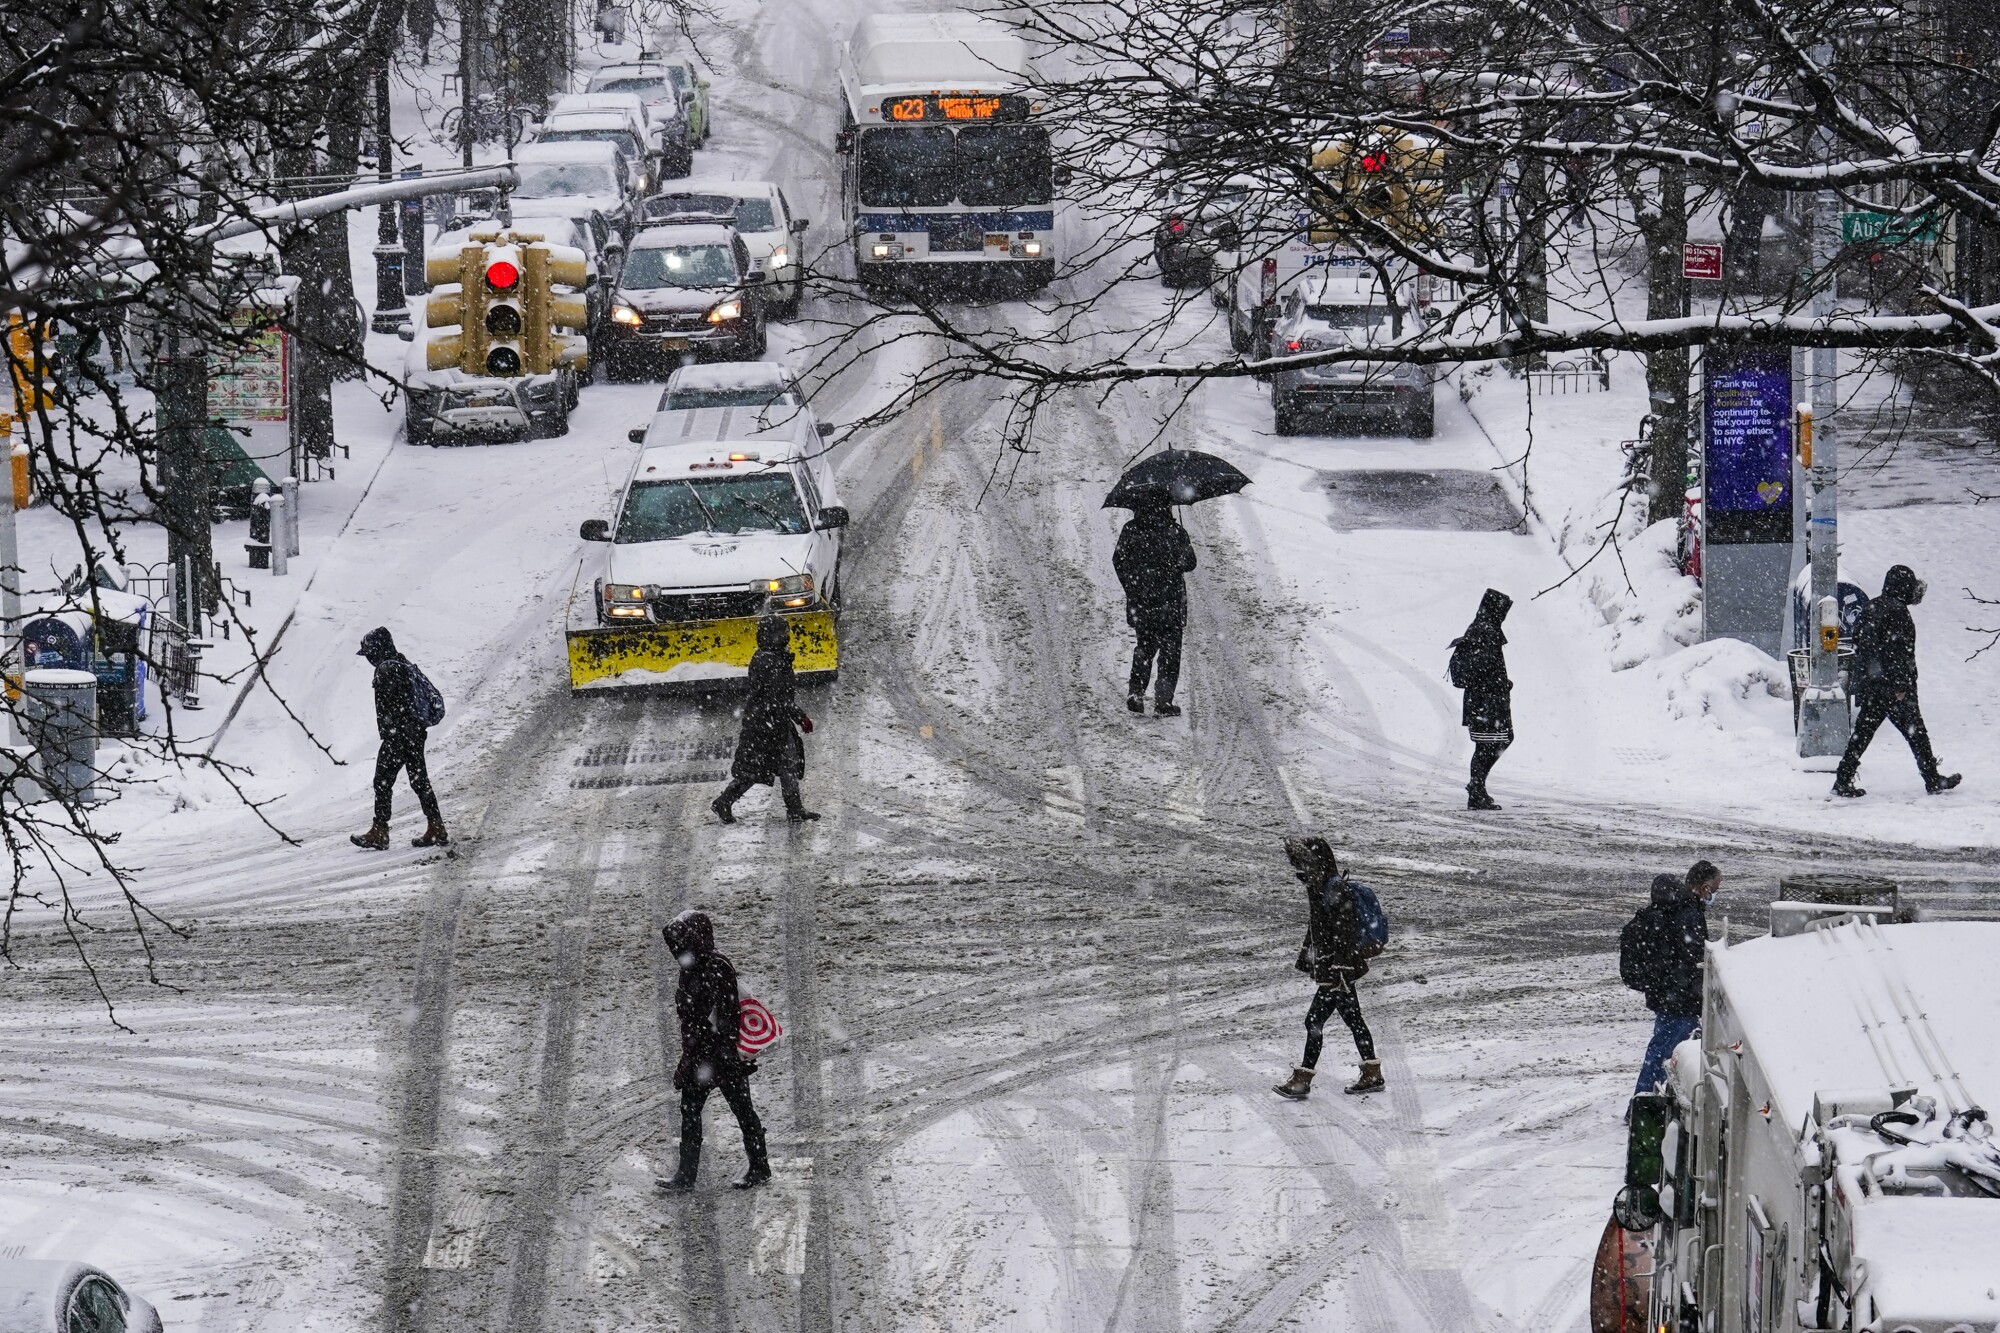 Pedestrians cross a snowy street in New York City. 